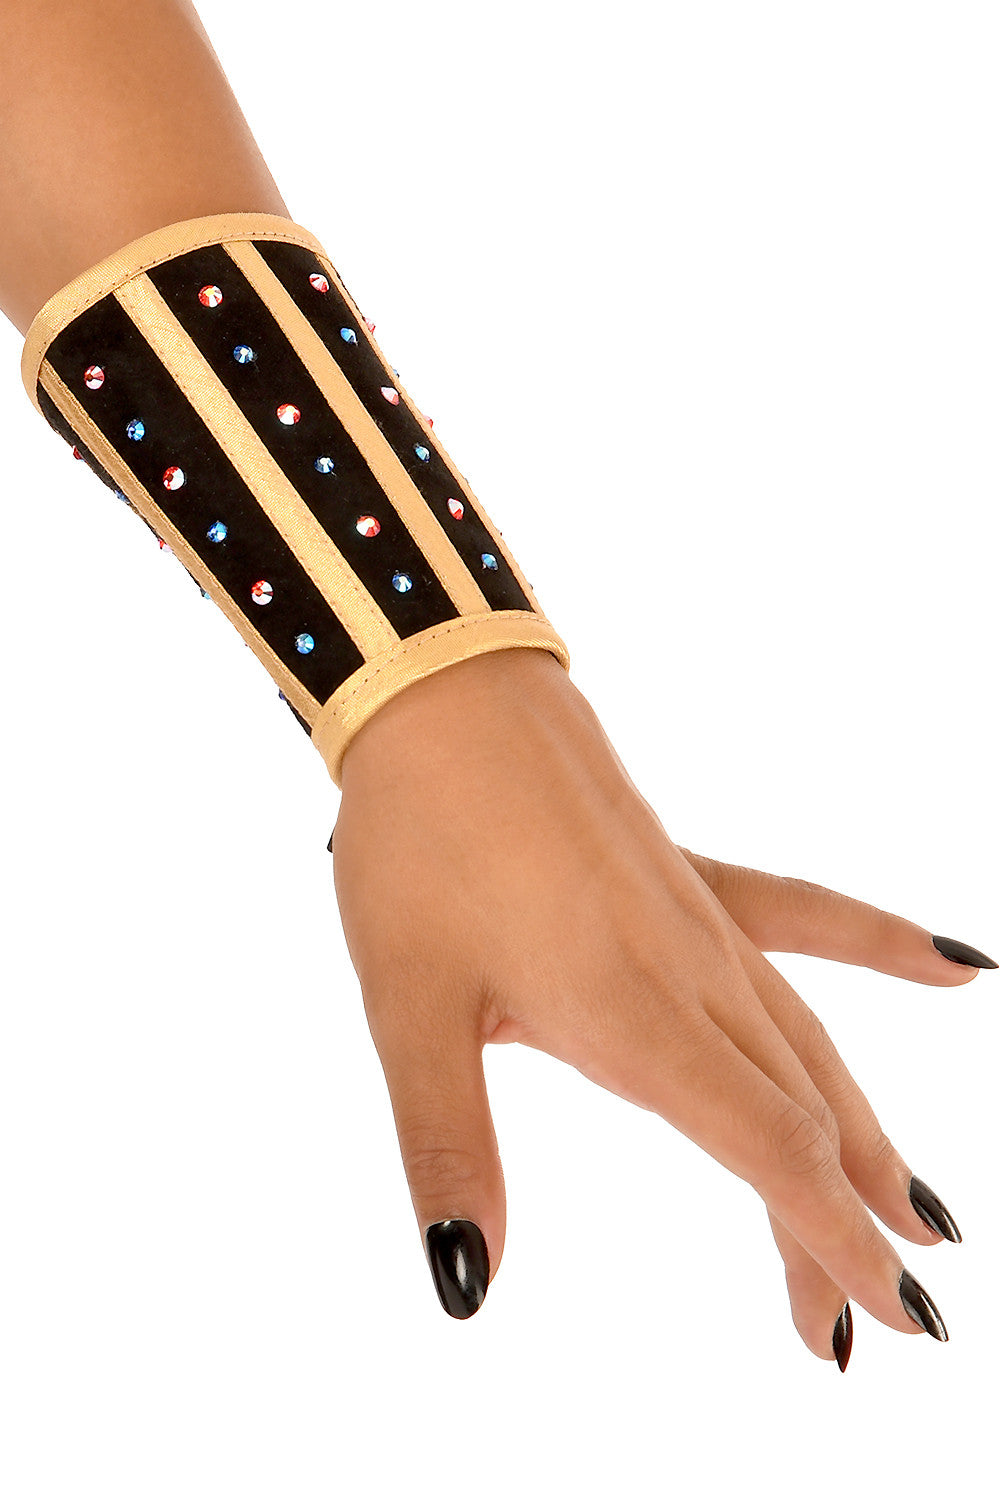 Nefertiri Wrist Cuffs (Pair)